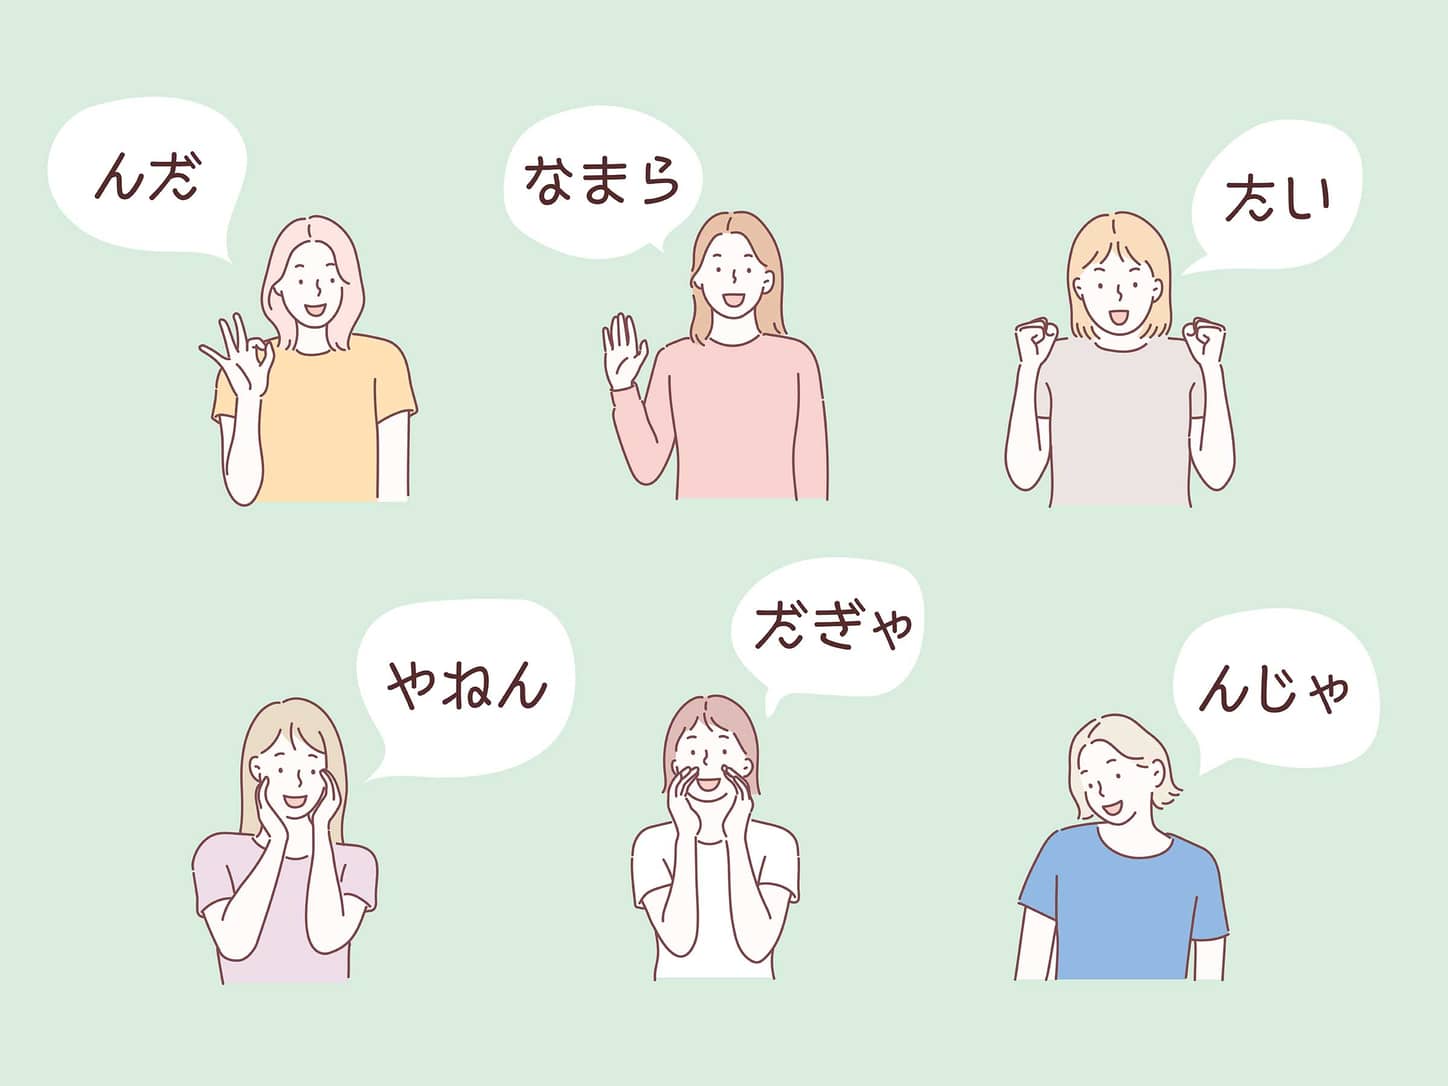 Mengenal Berbagai Macam Dialek Dalam Bahasa Jepang